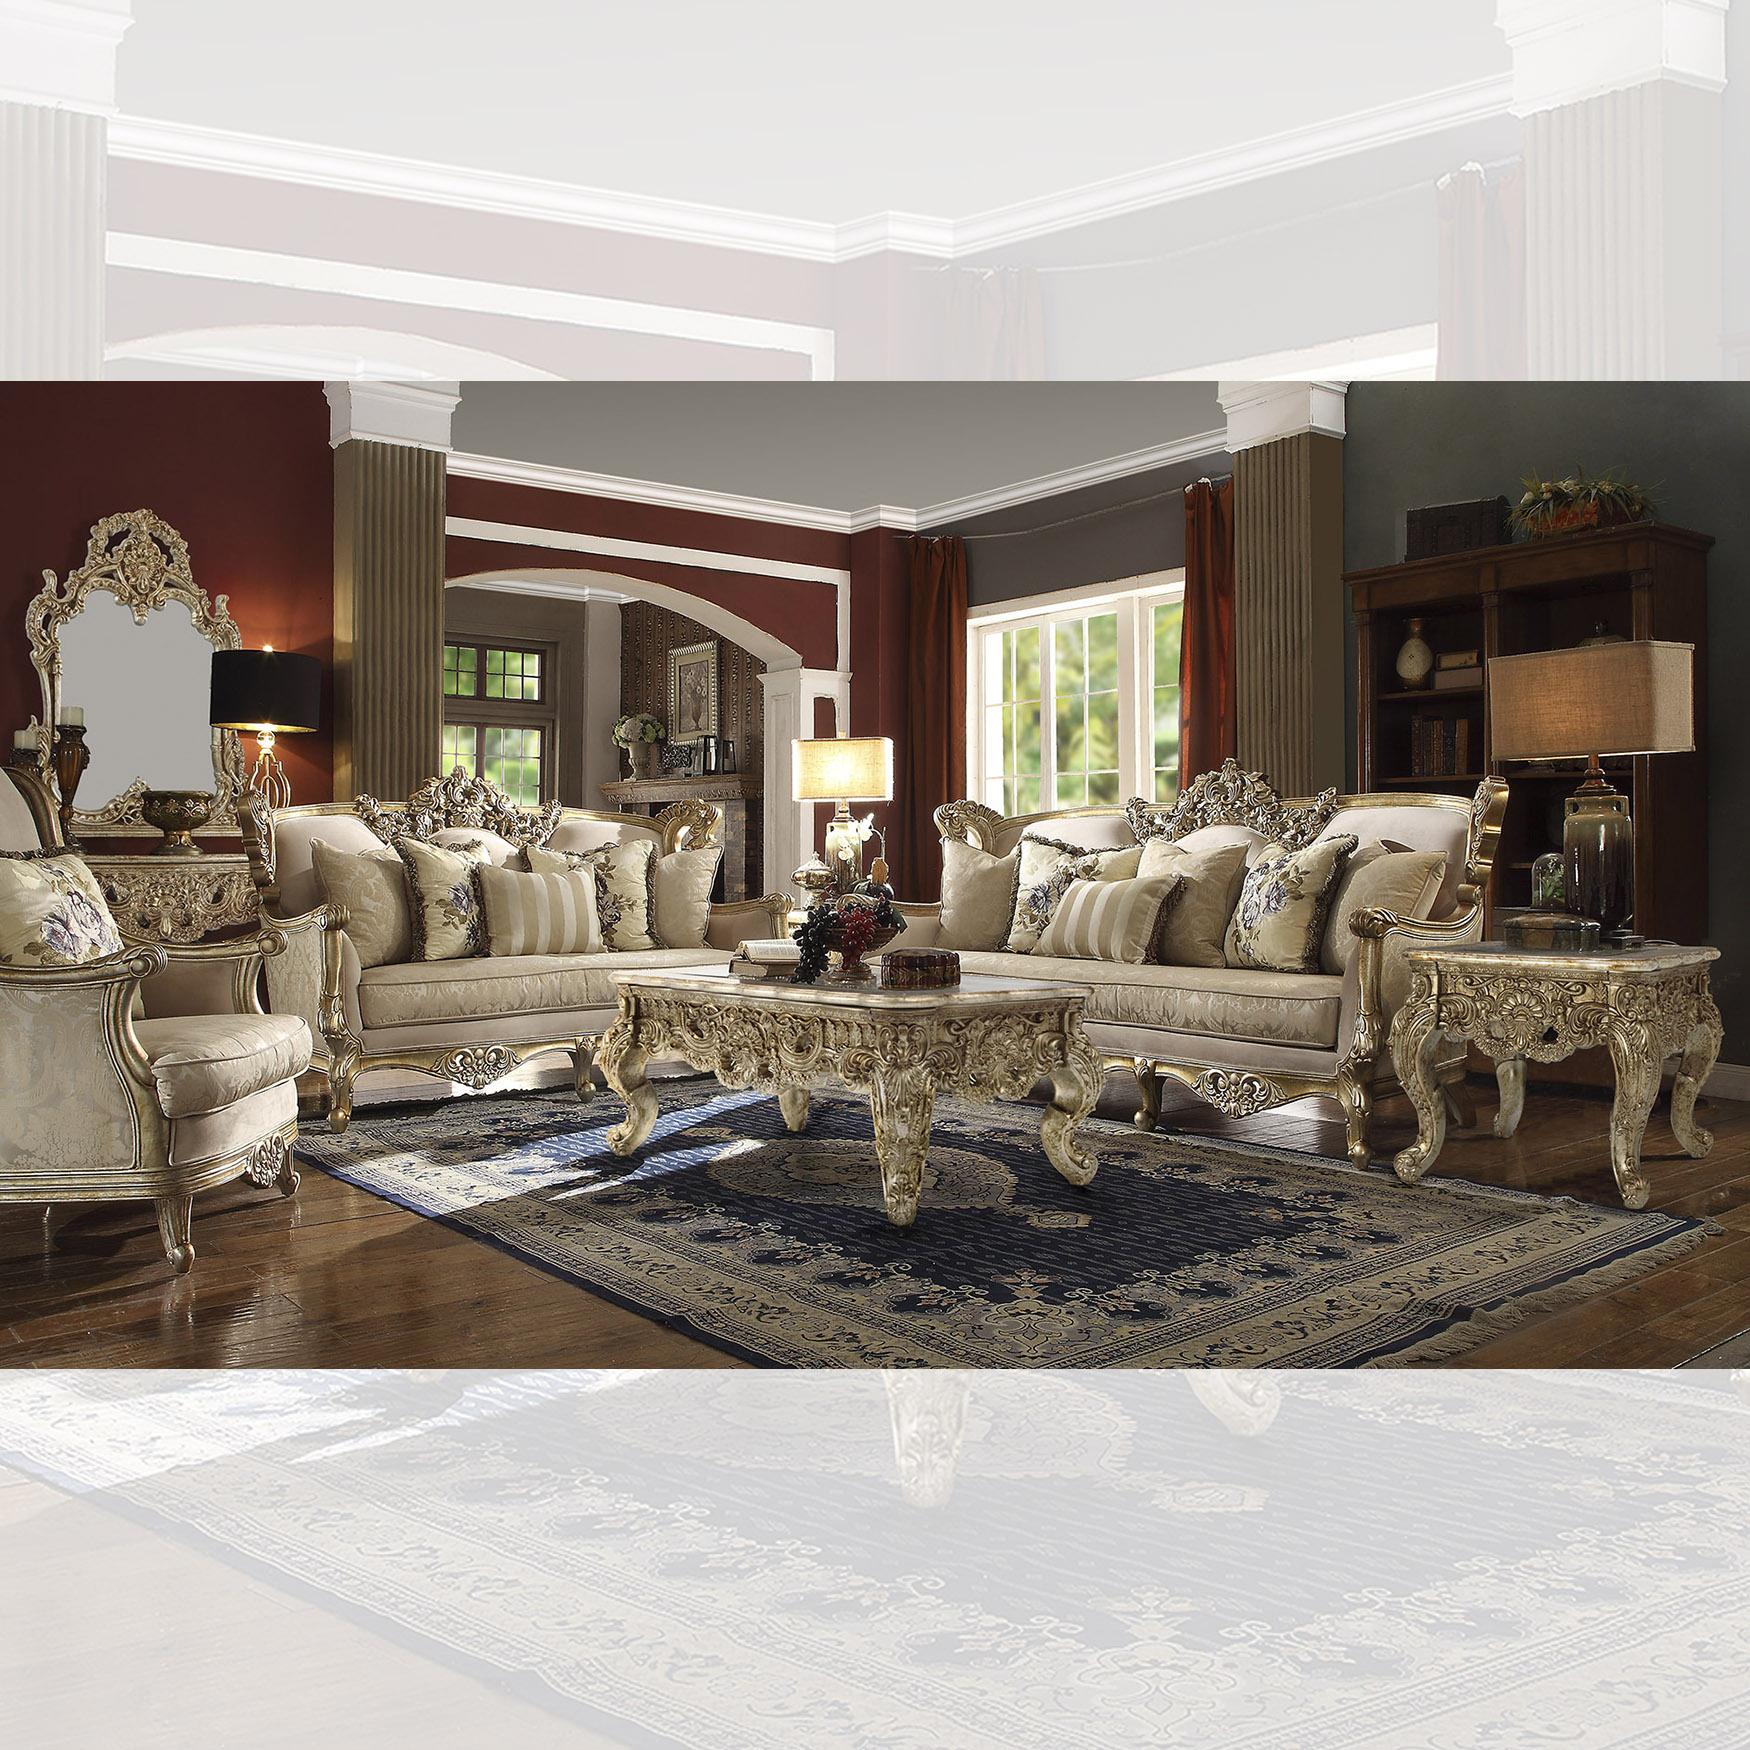 

    
HD-04-5-PC Metallic Bright Gold Finish Sofa Set 5Pcs w/ Coffee Tables Traditional Homey Design HD-04
